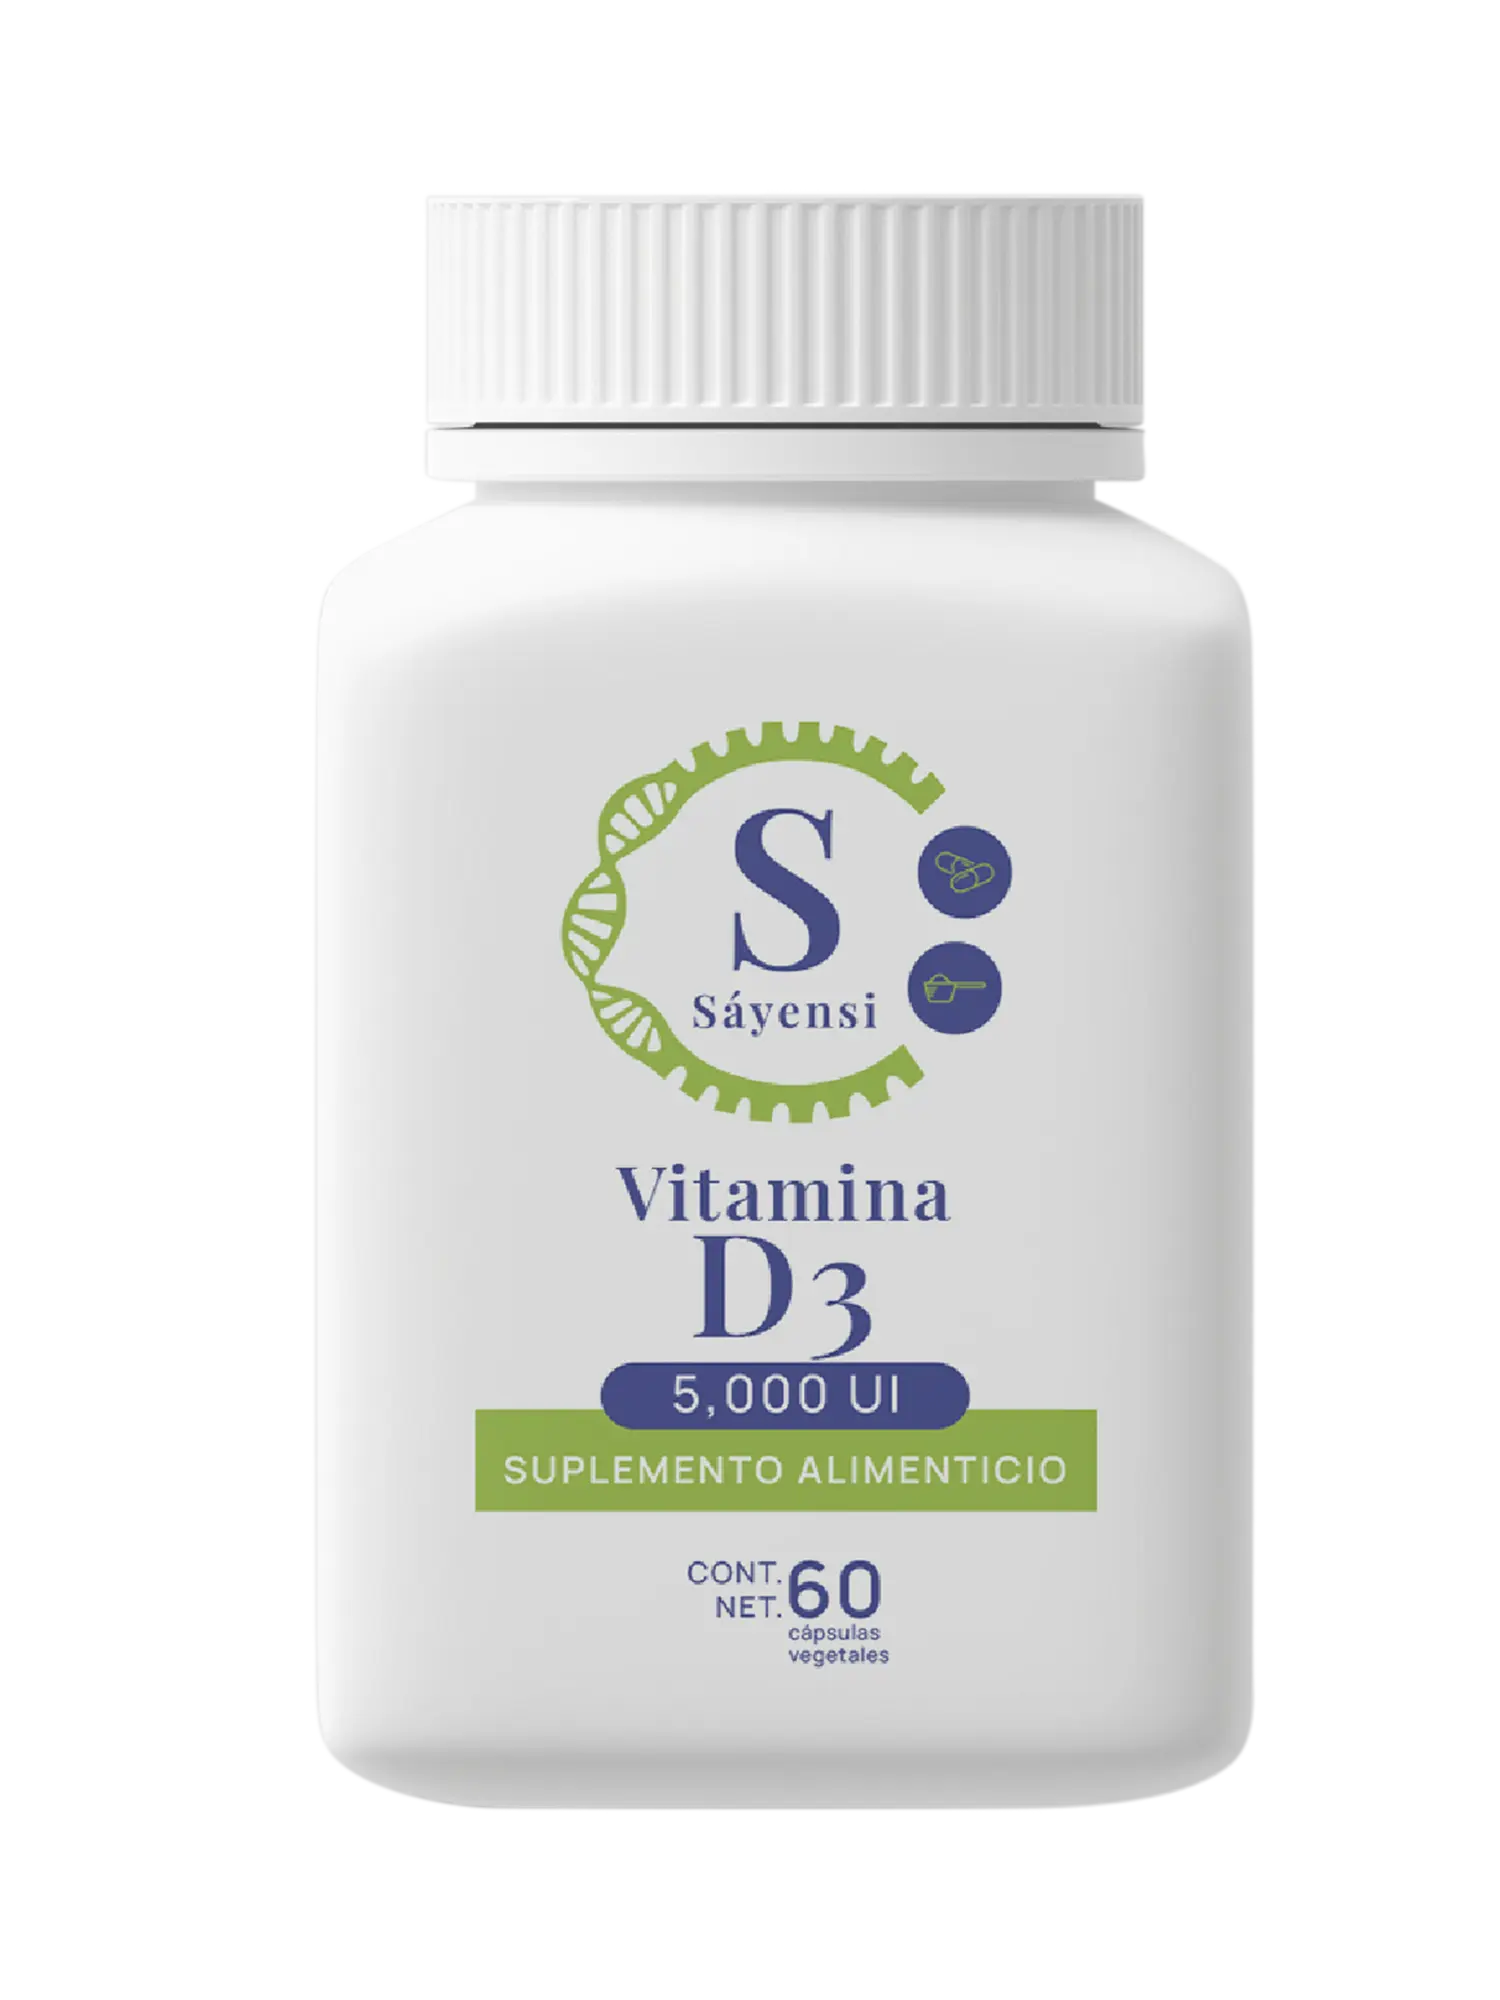 Vitamina D3 Sáyensi - 5,000 UI - PURESUPPLY